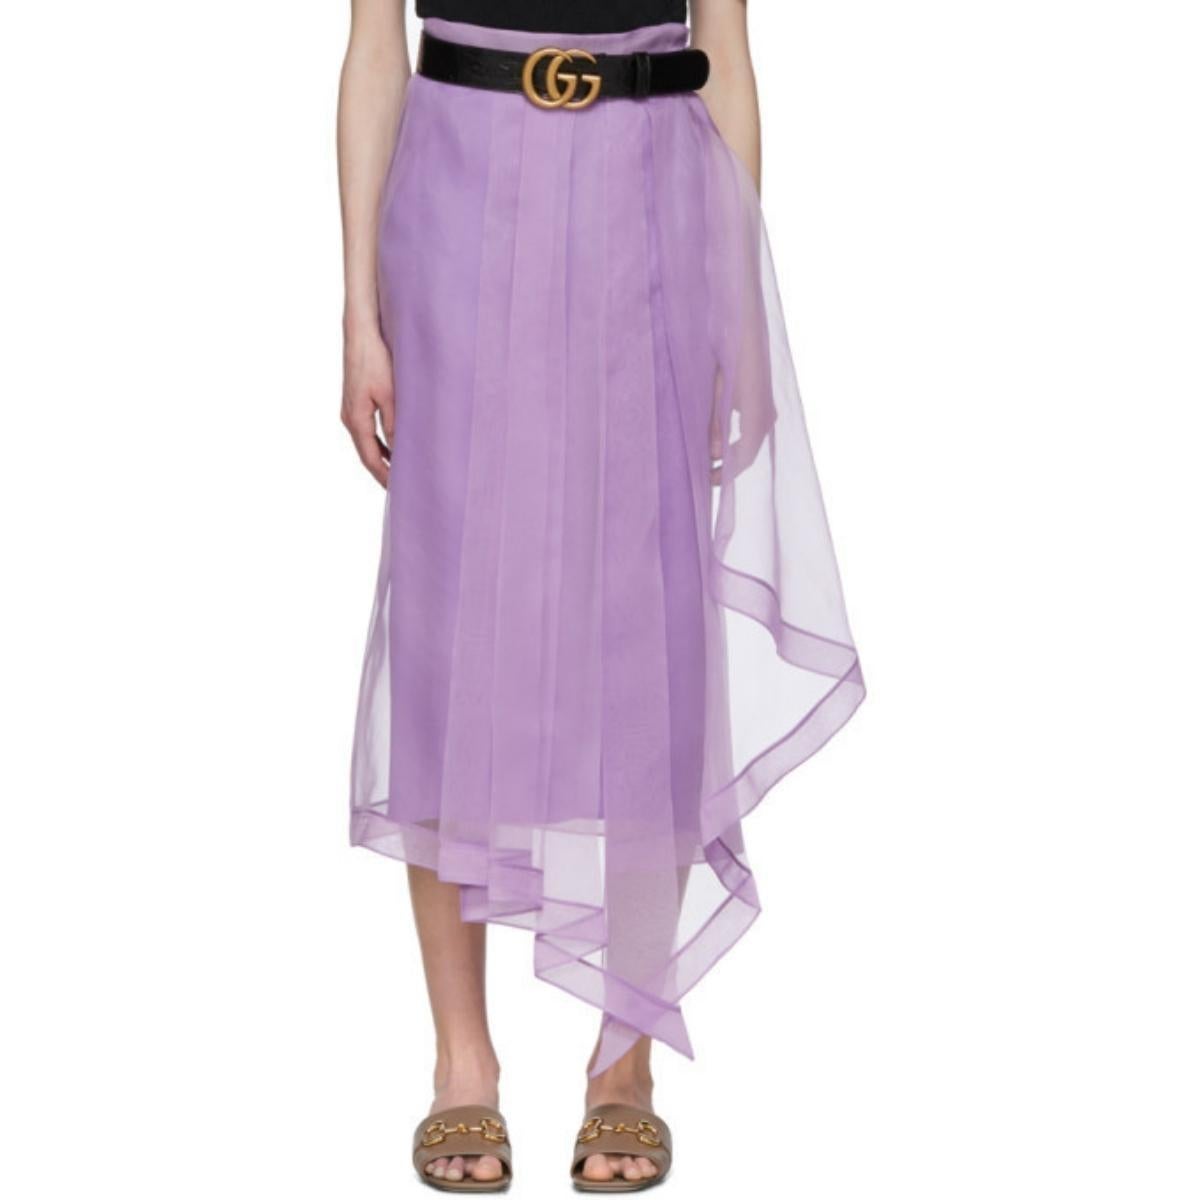 gucci purple skirt